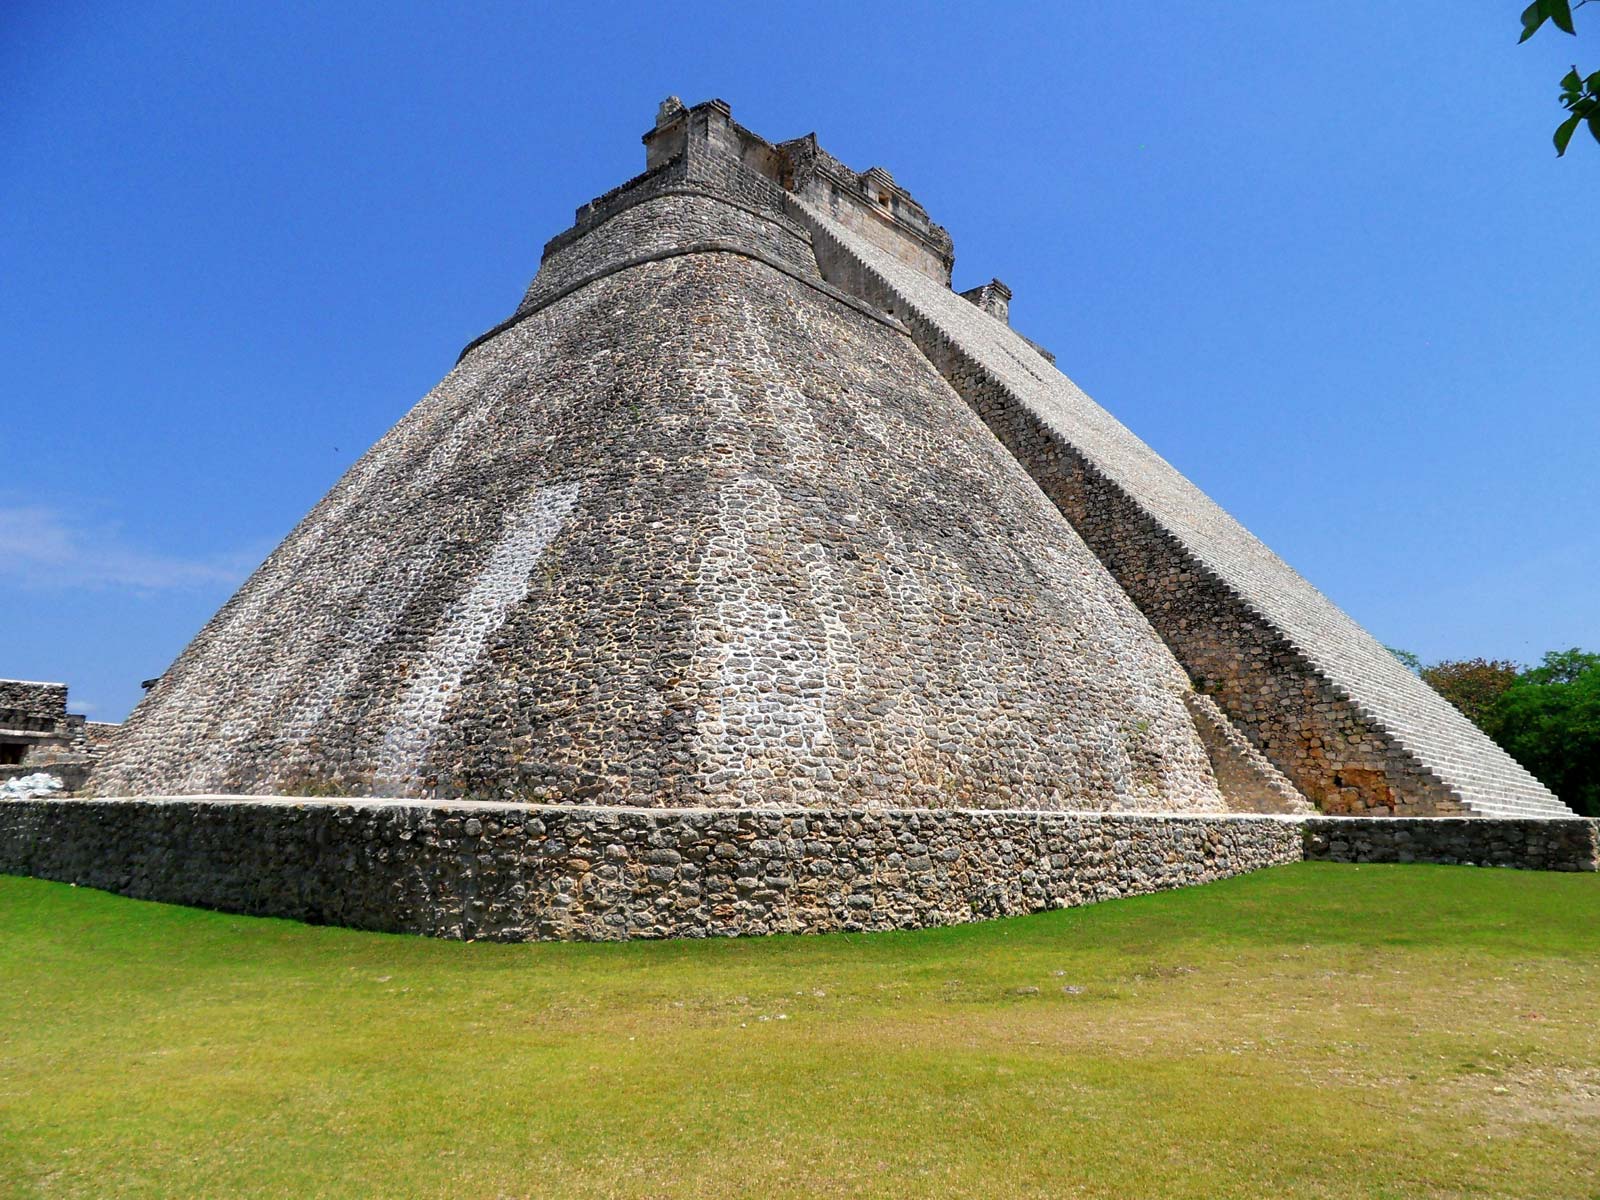 The Pyramid of Magician, Mayan Temples